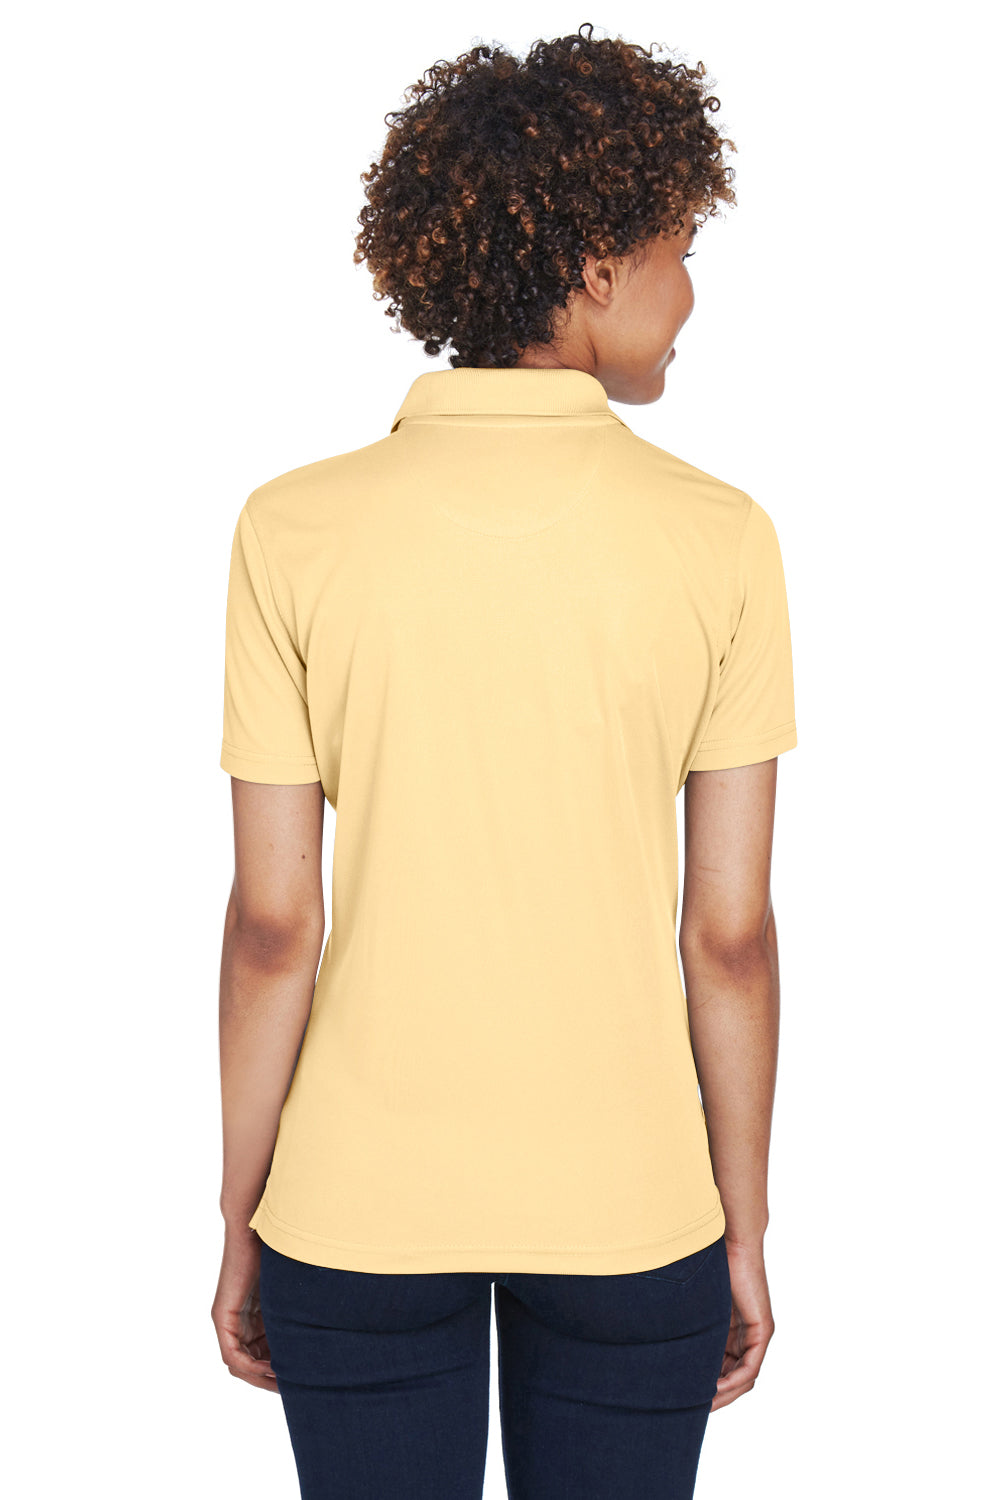 UltraClub 8210L Womens Cool & Dry Moisture Wicking Short Sleeve Polo Shirt Yellow Haze Back